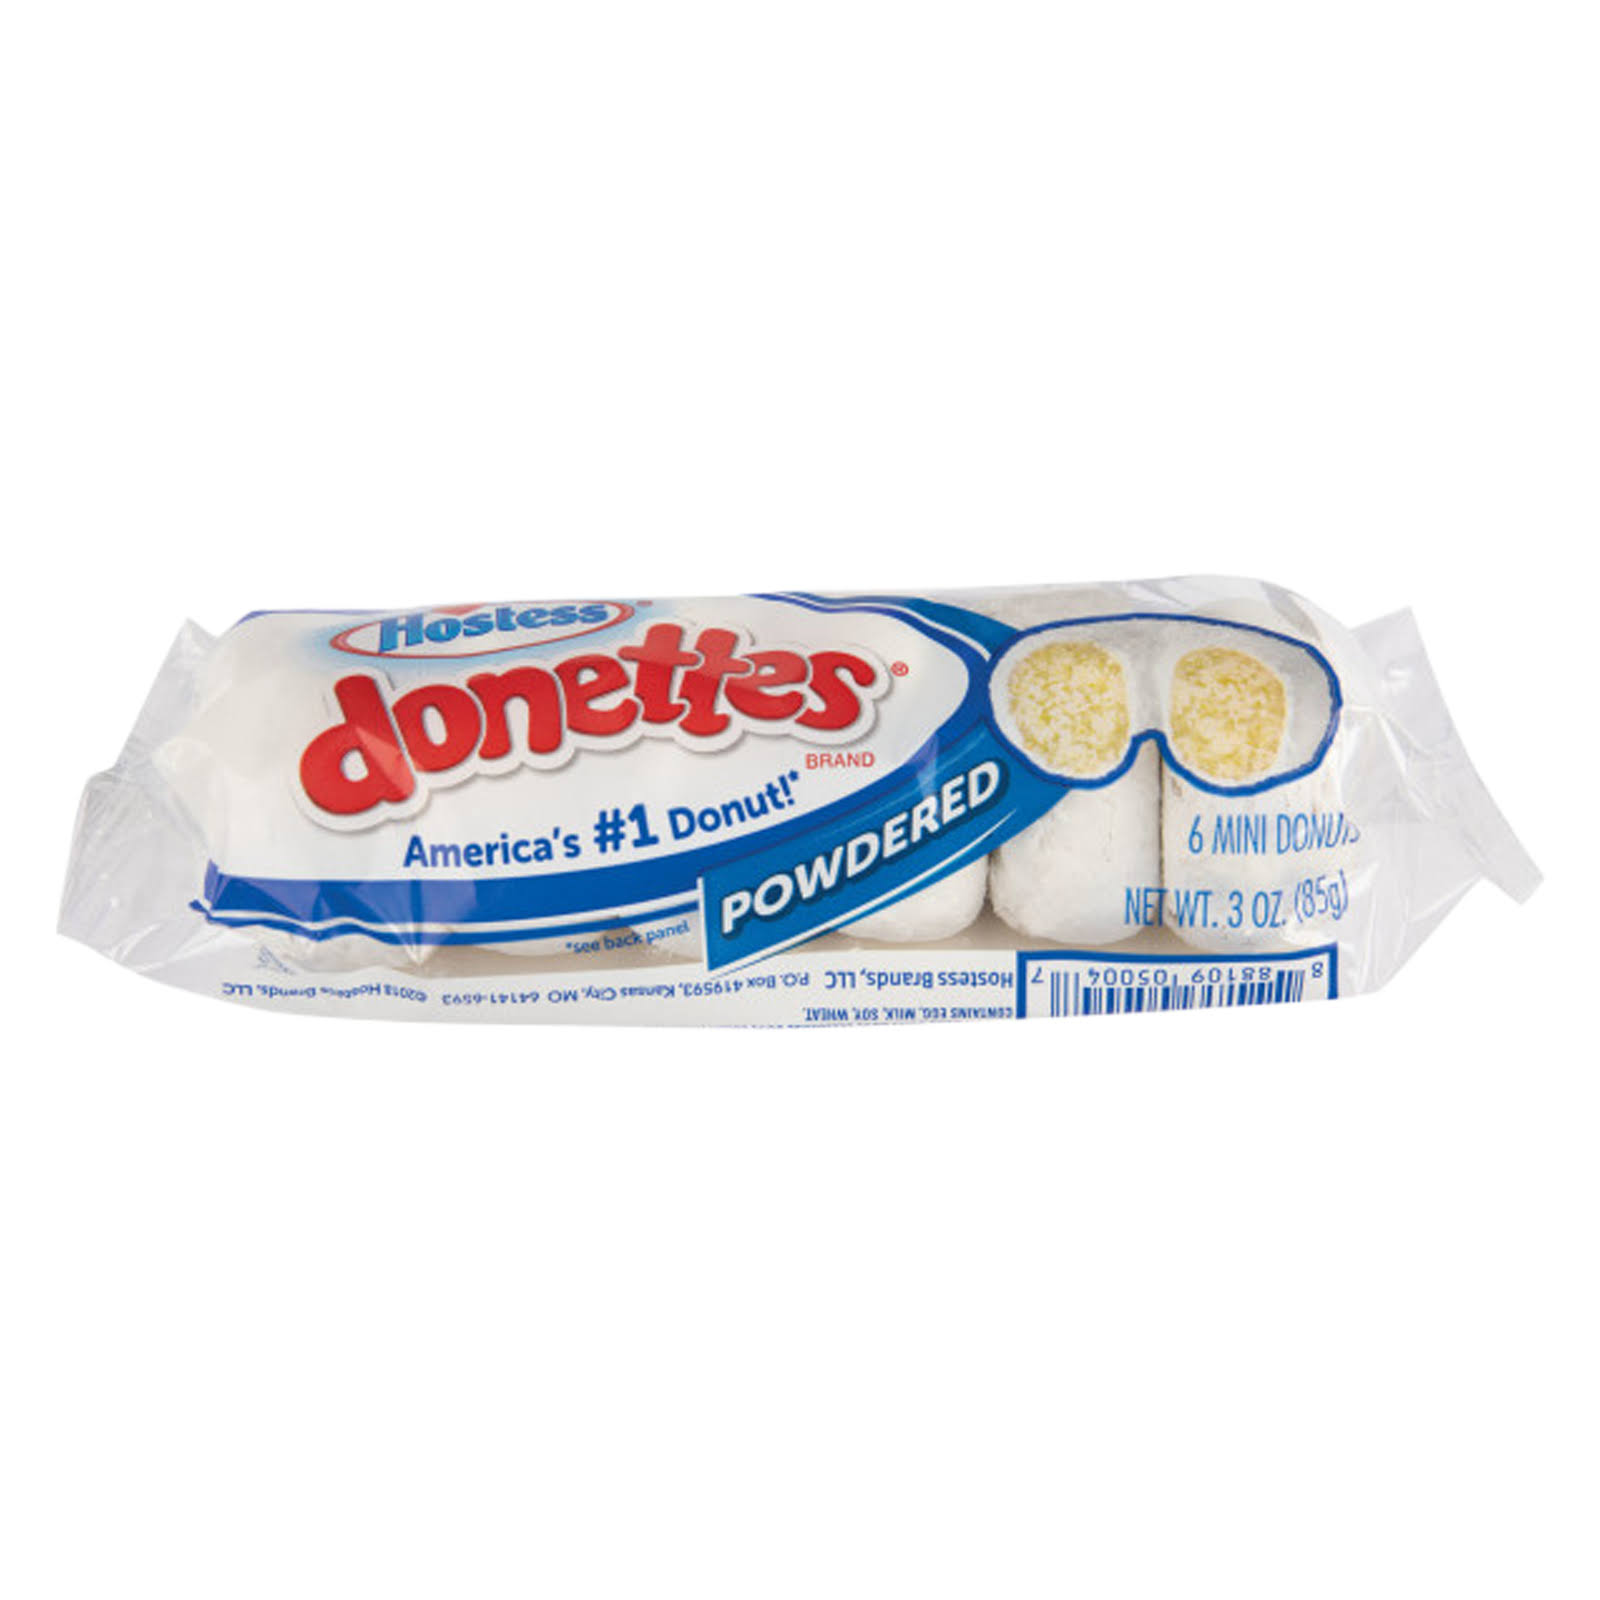 Hostess Donettes Powdered Mini Donuts - 6 Mini Donuts, 85g